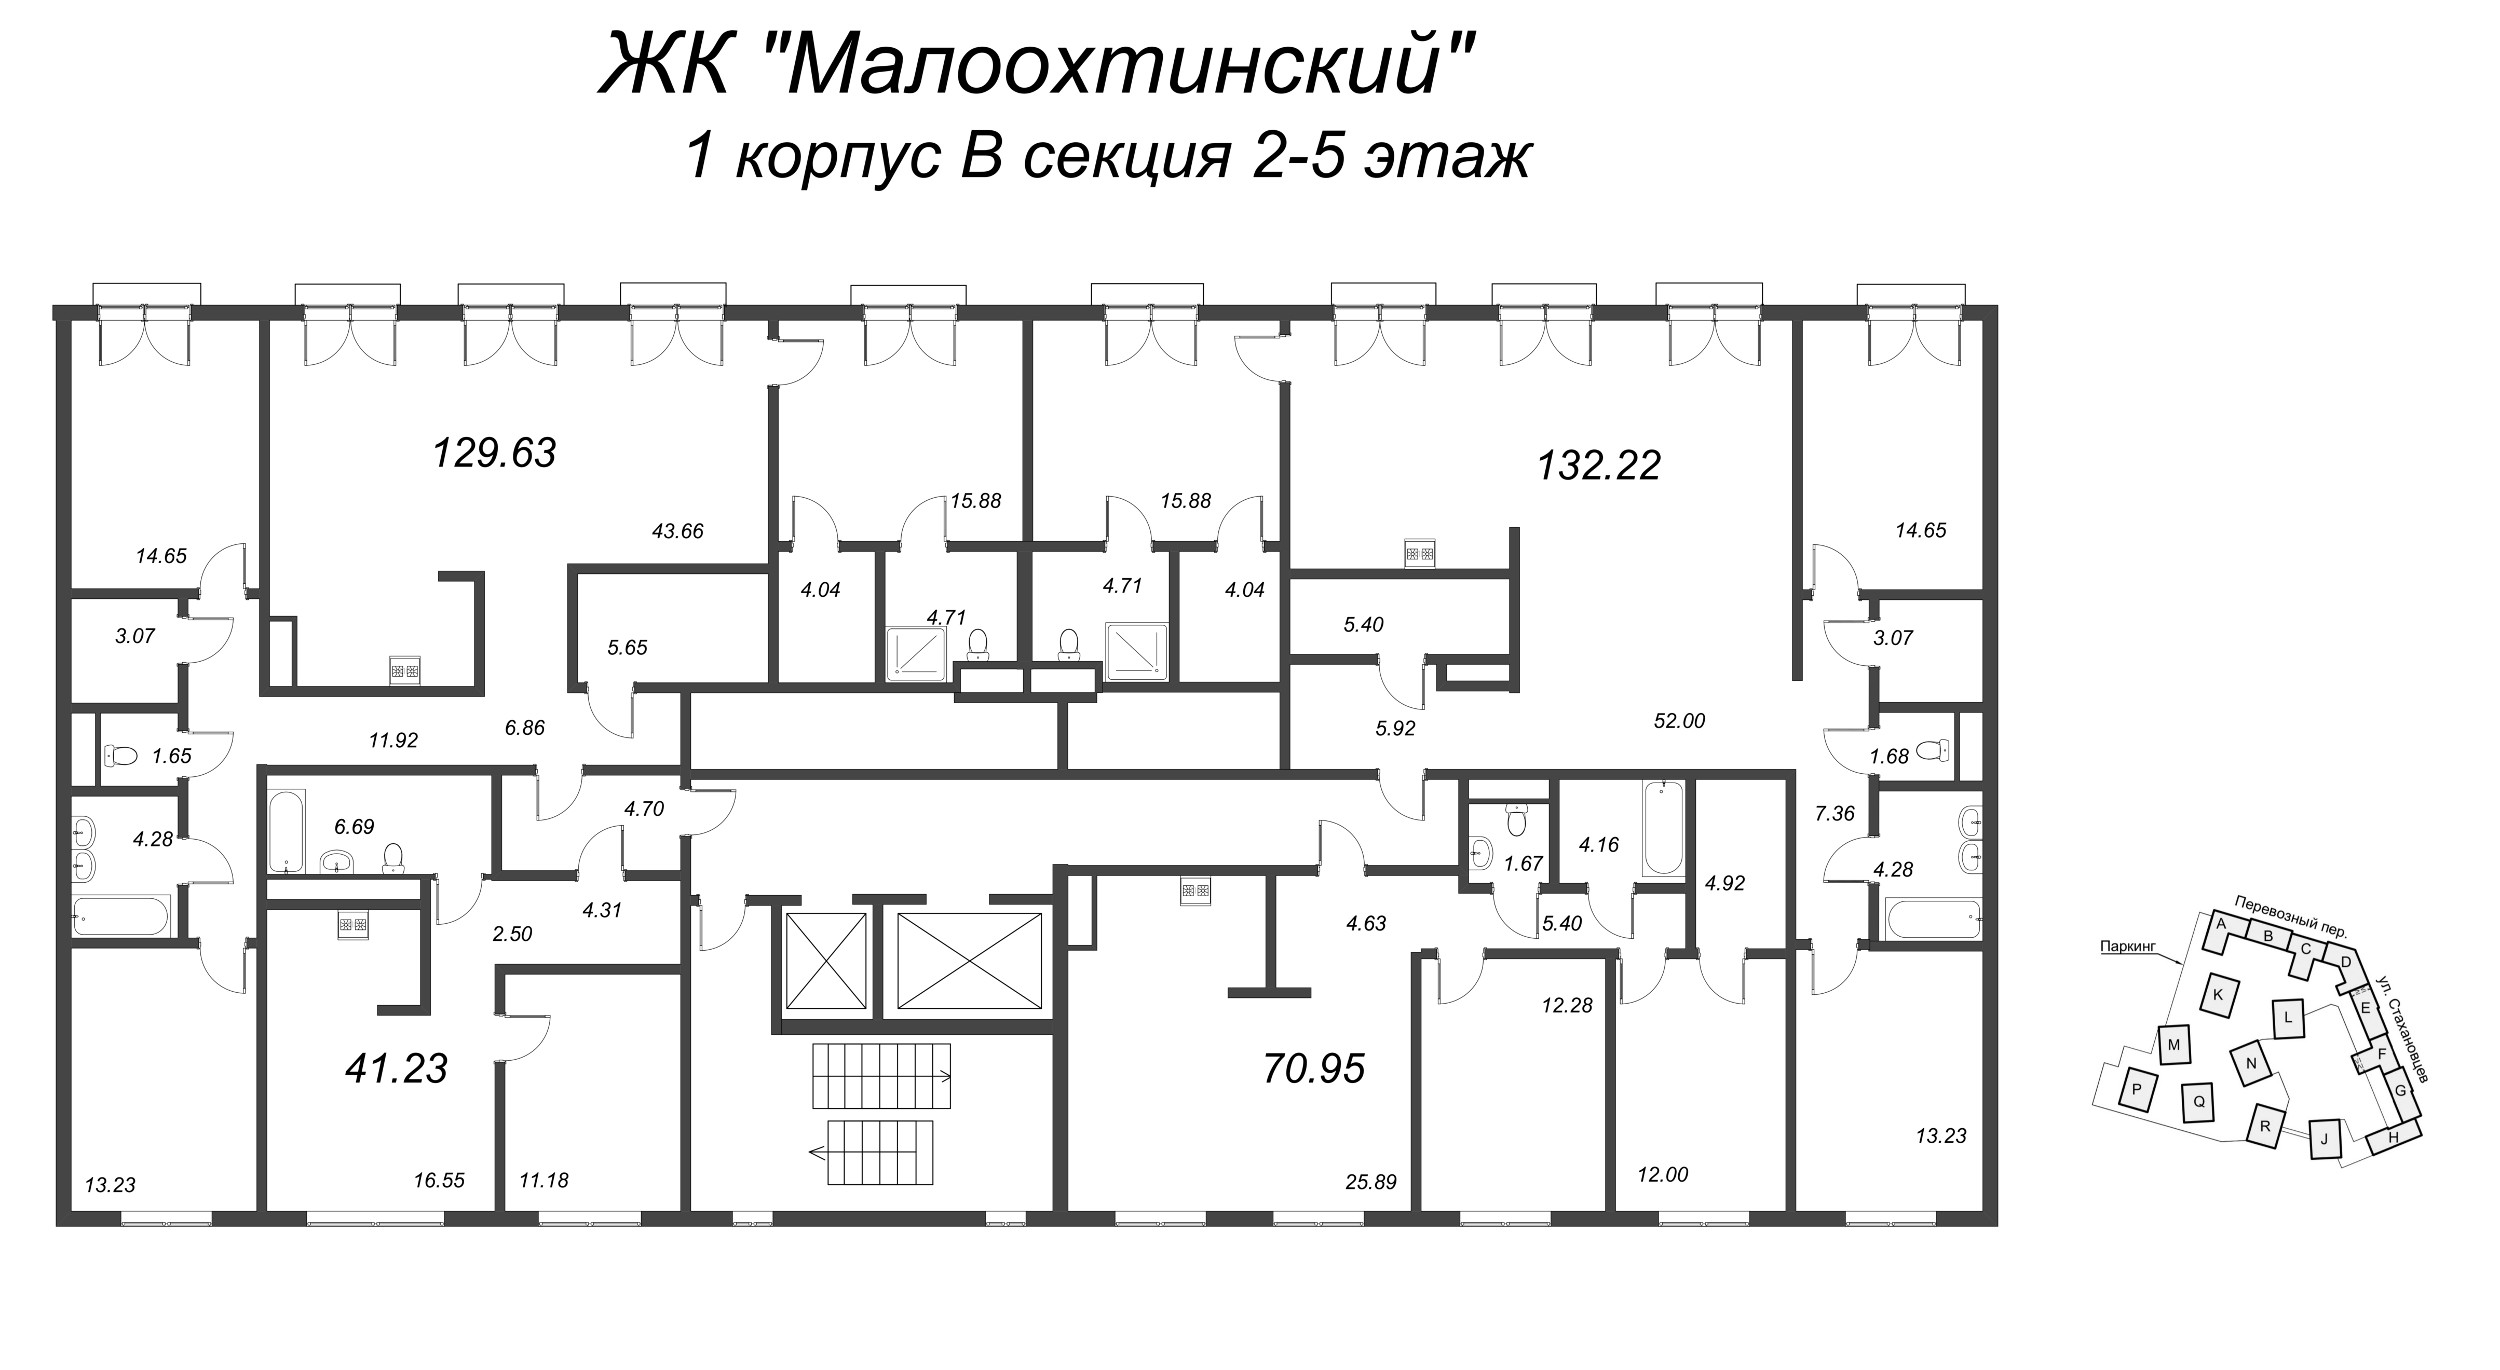 4-комнатная (Евро) квартира, 133 м² - планировка этажа